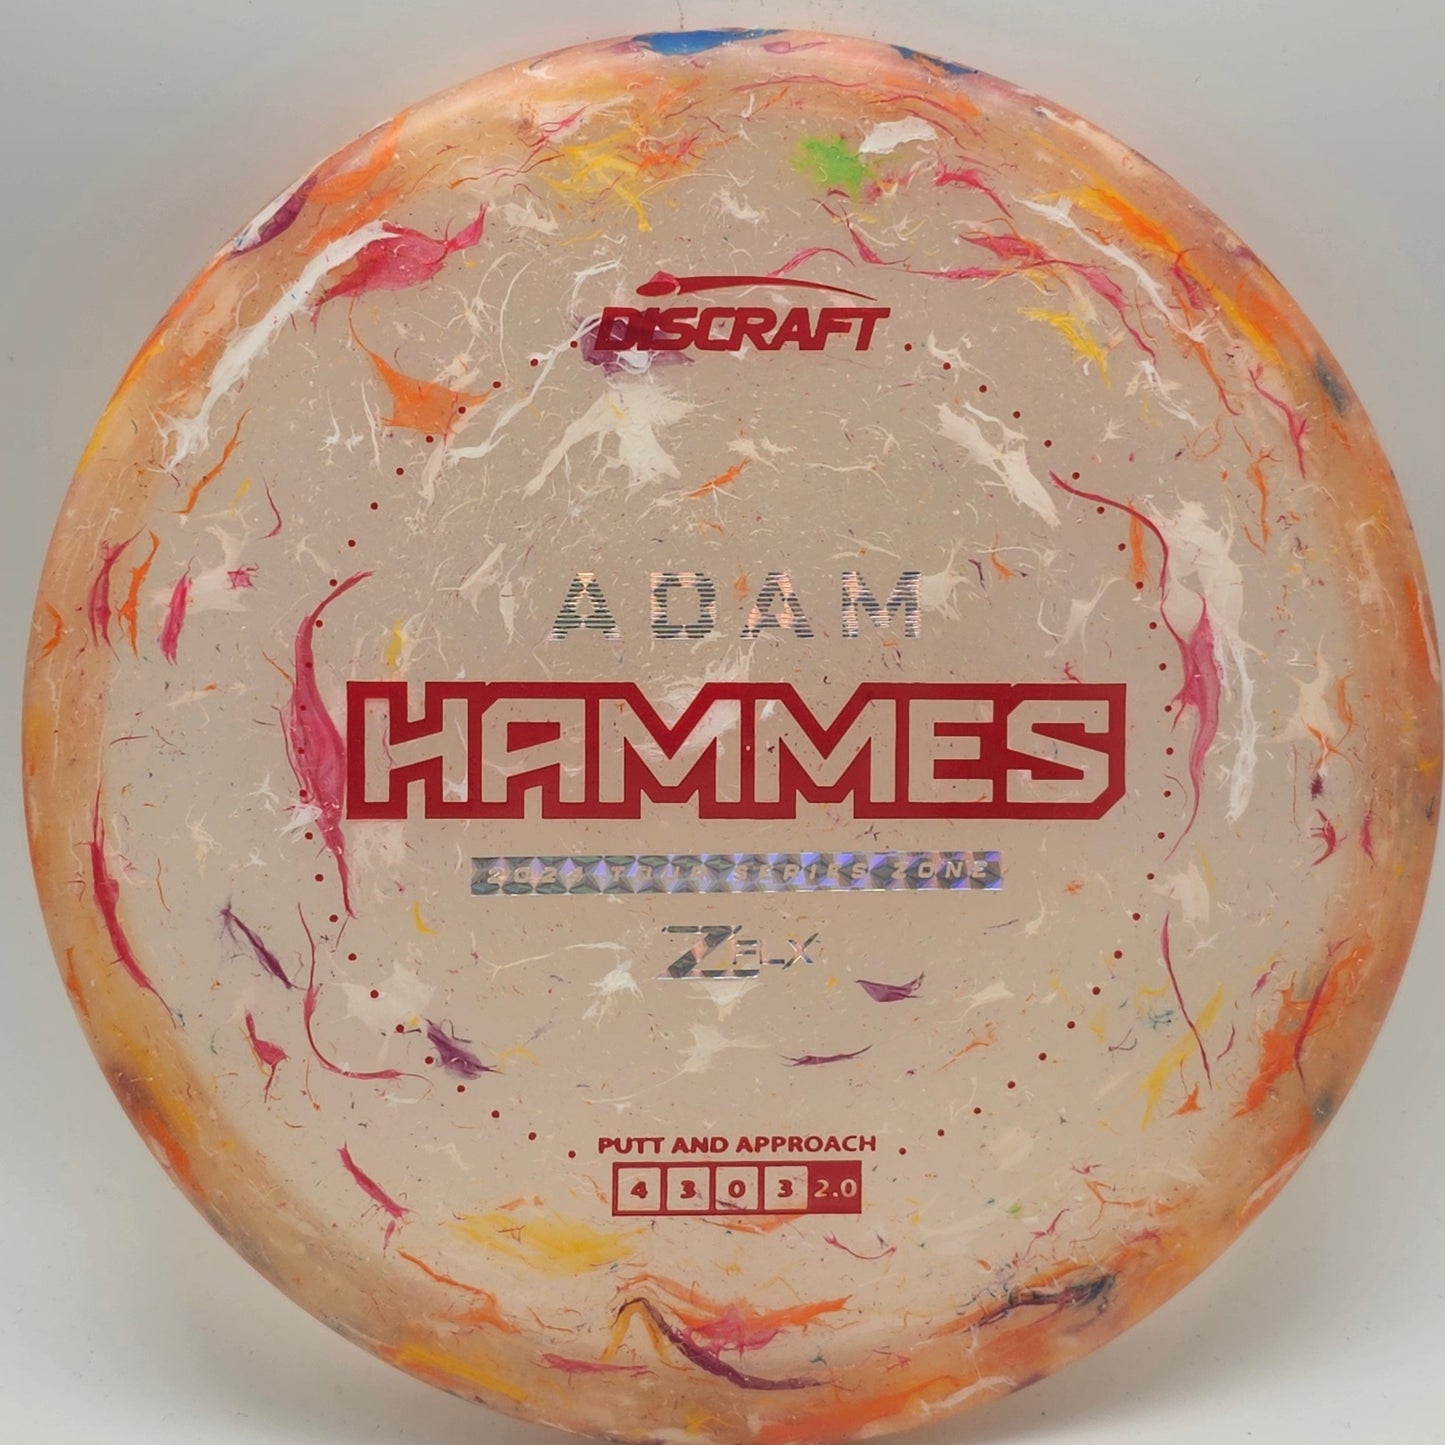 Discraft Adam Hammes Zone -  Tour Series 2024